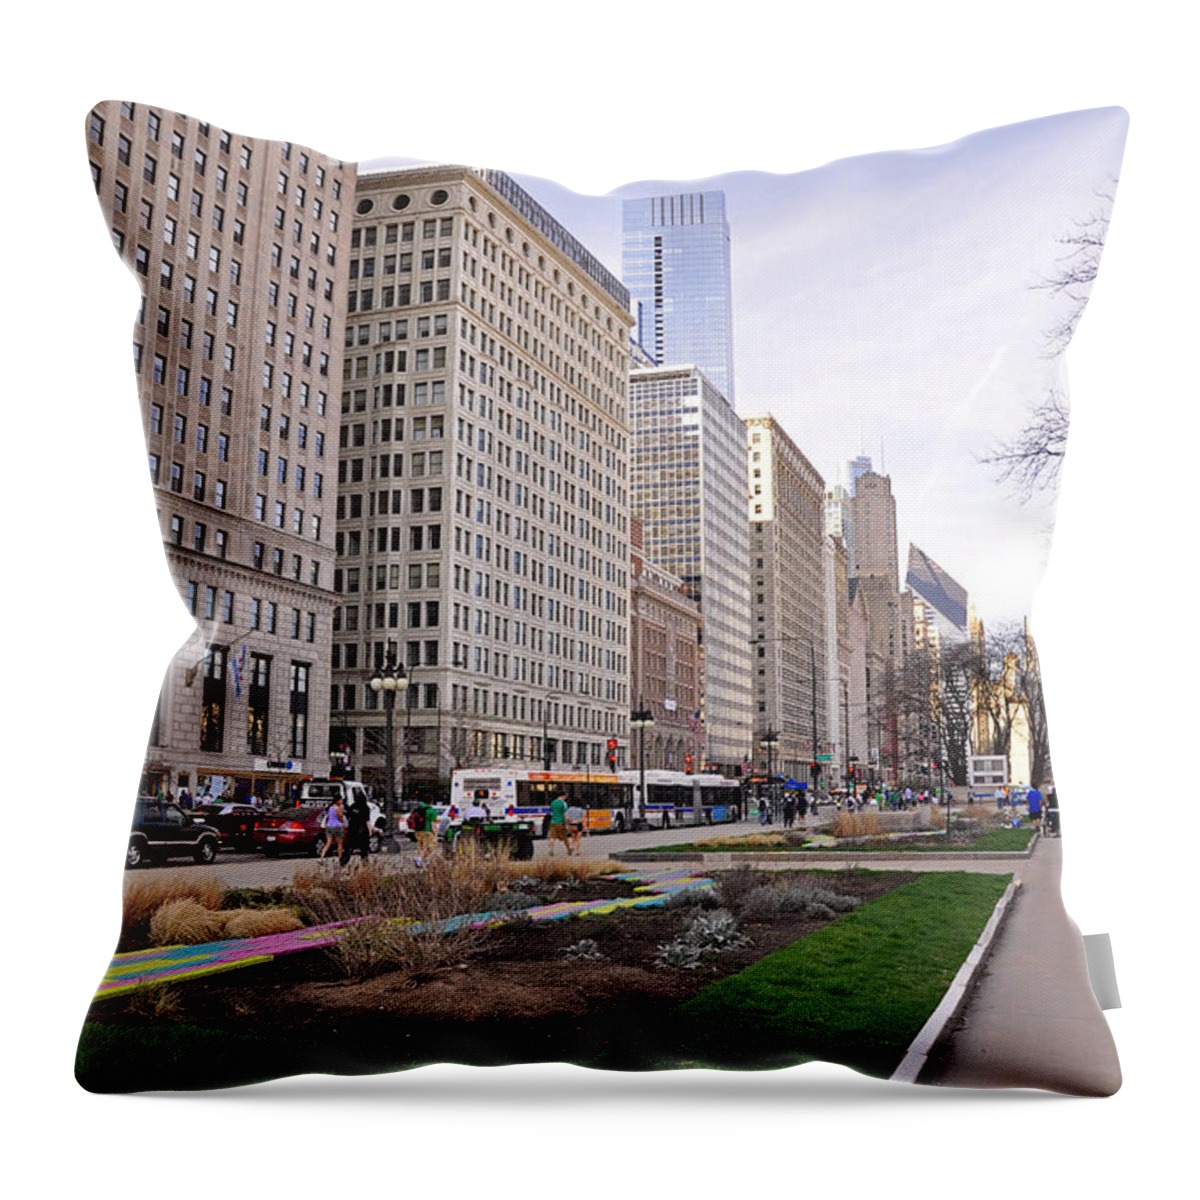 Michigan Avenue Throw Pillow featuring the photograph Michigan Avenue by Dejan Jovanovic